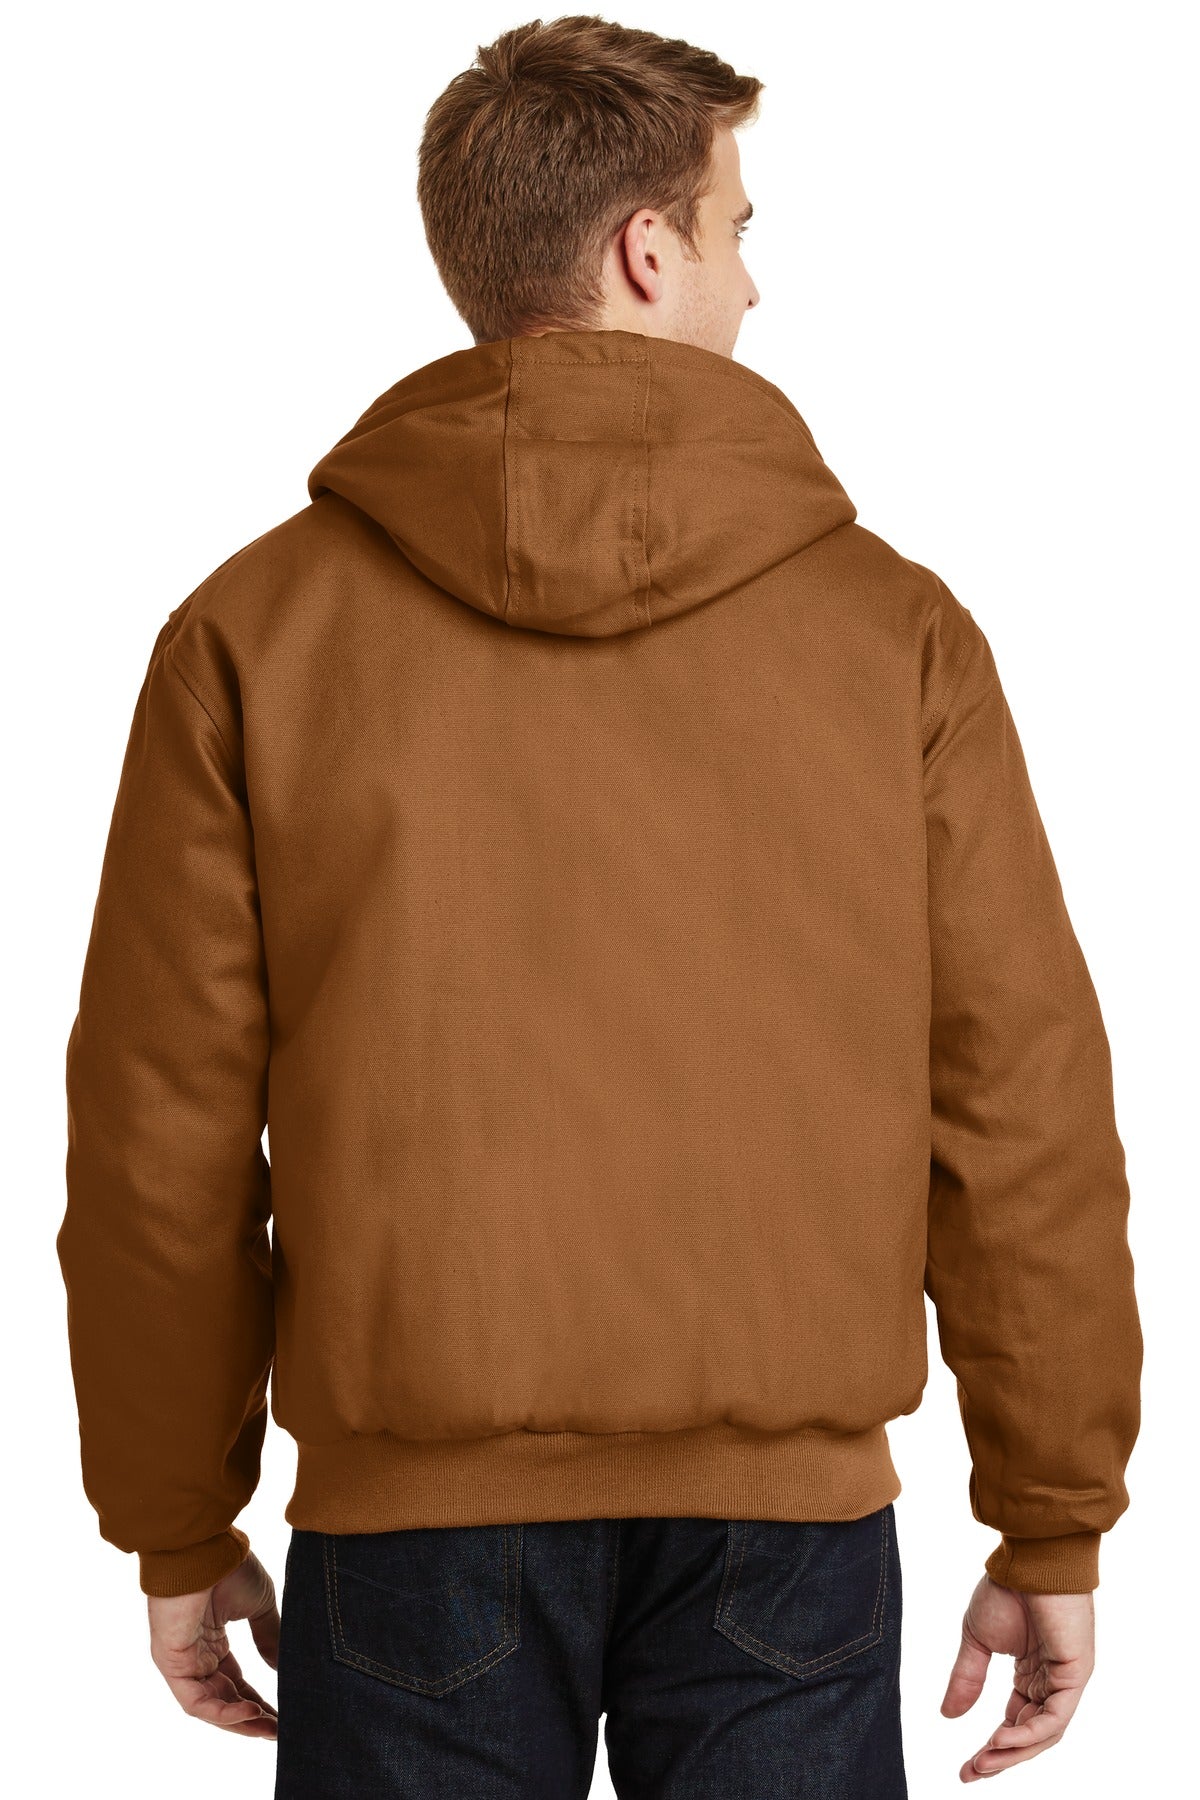 CornerStone - Duck Cloth Hooded Work Jacket. J763H